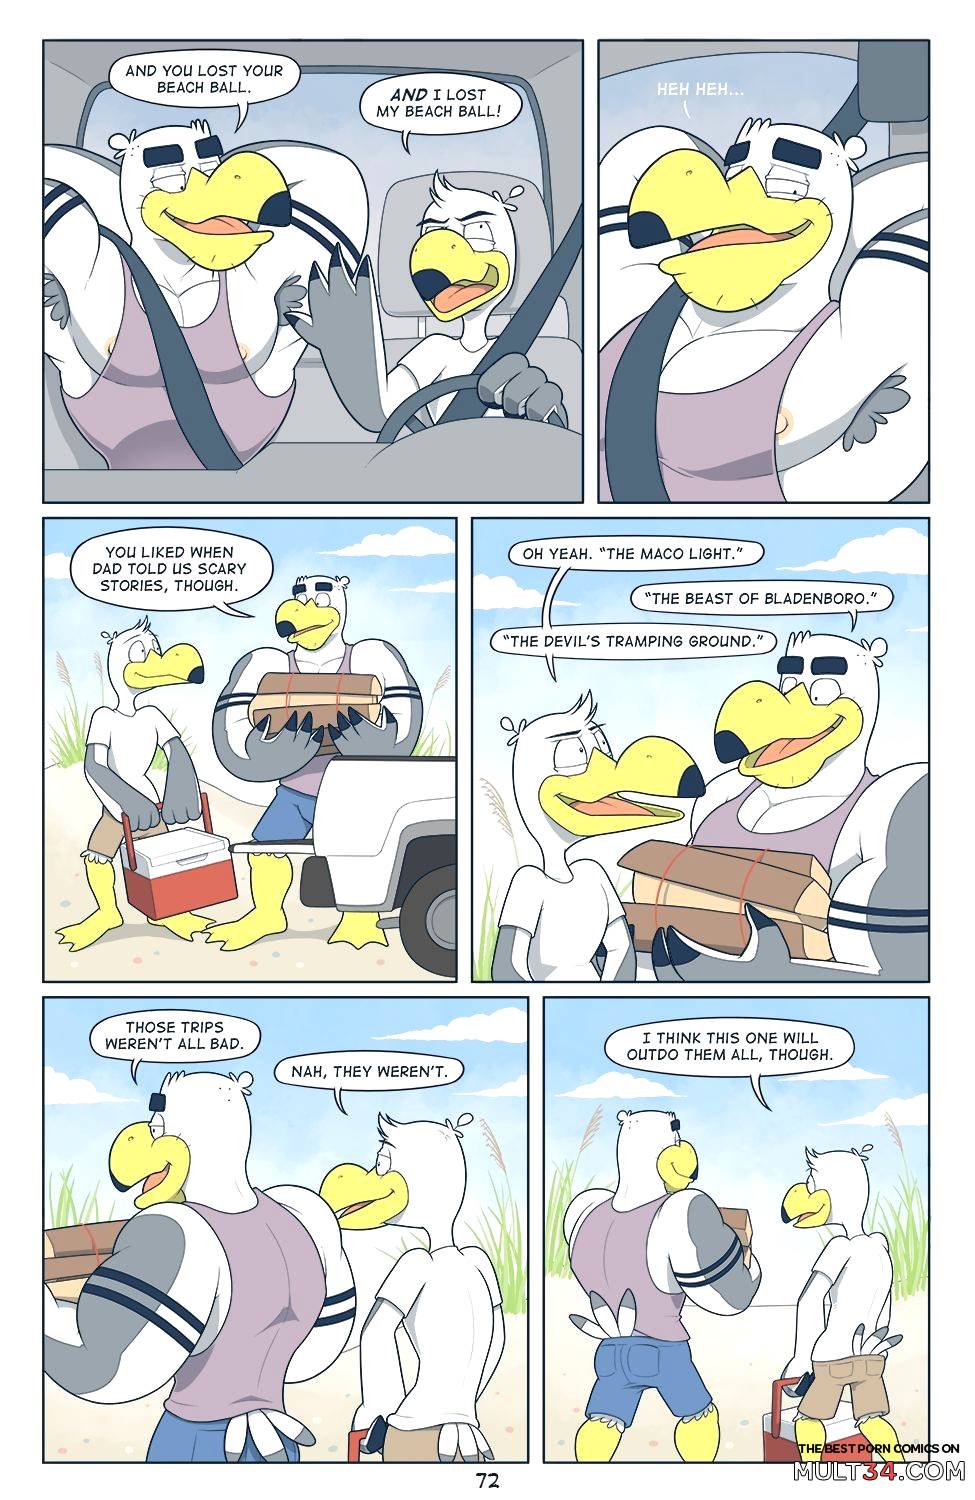 Brogulls page 73